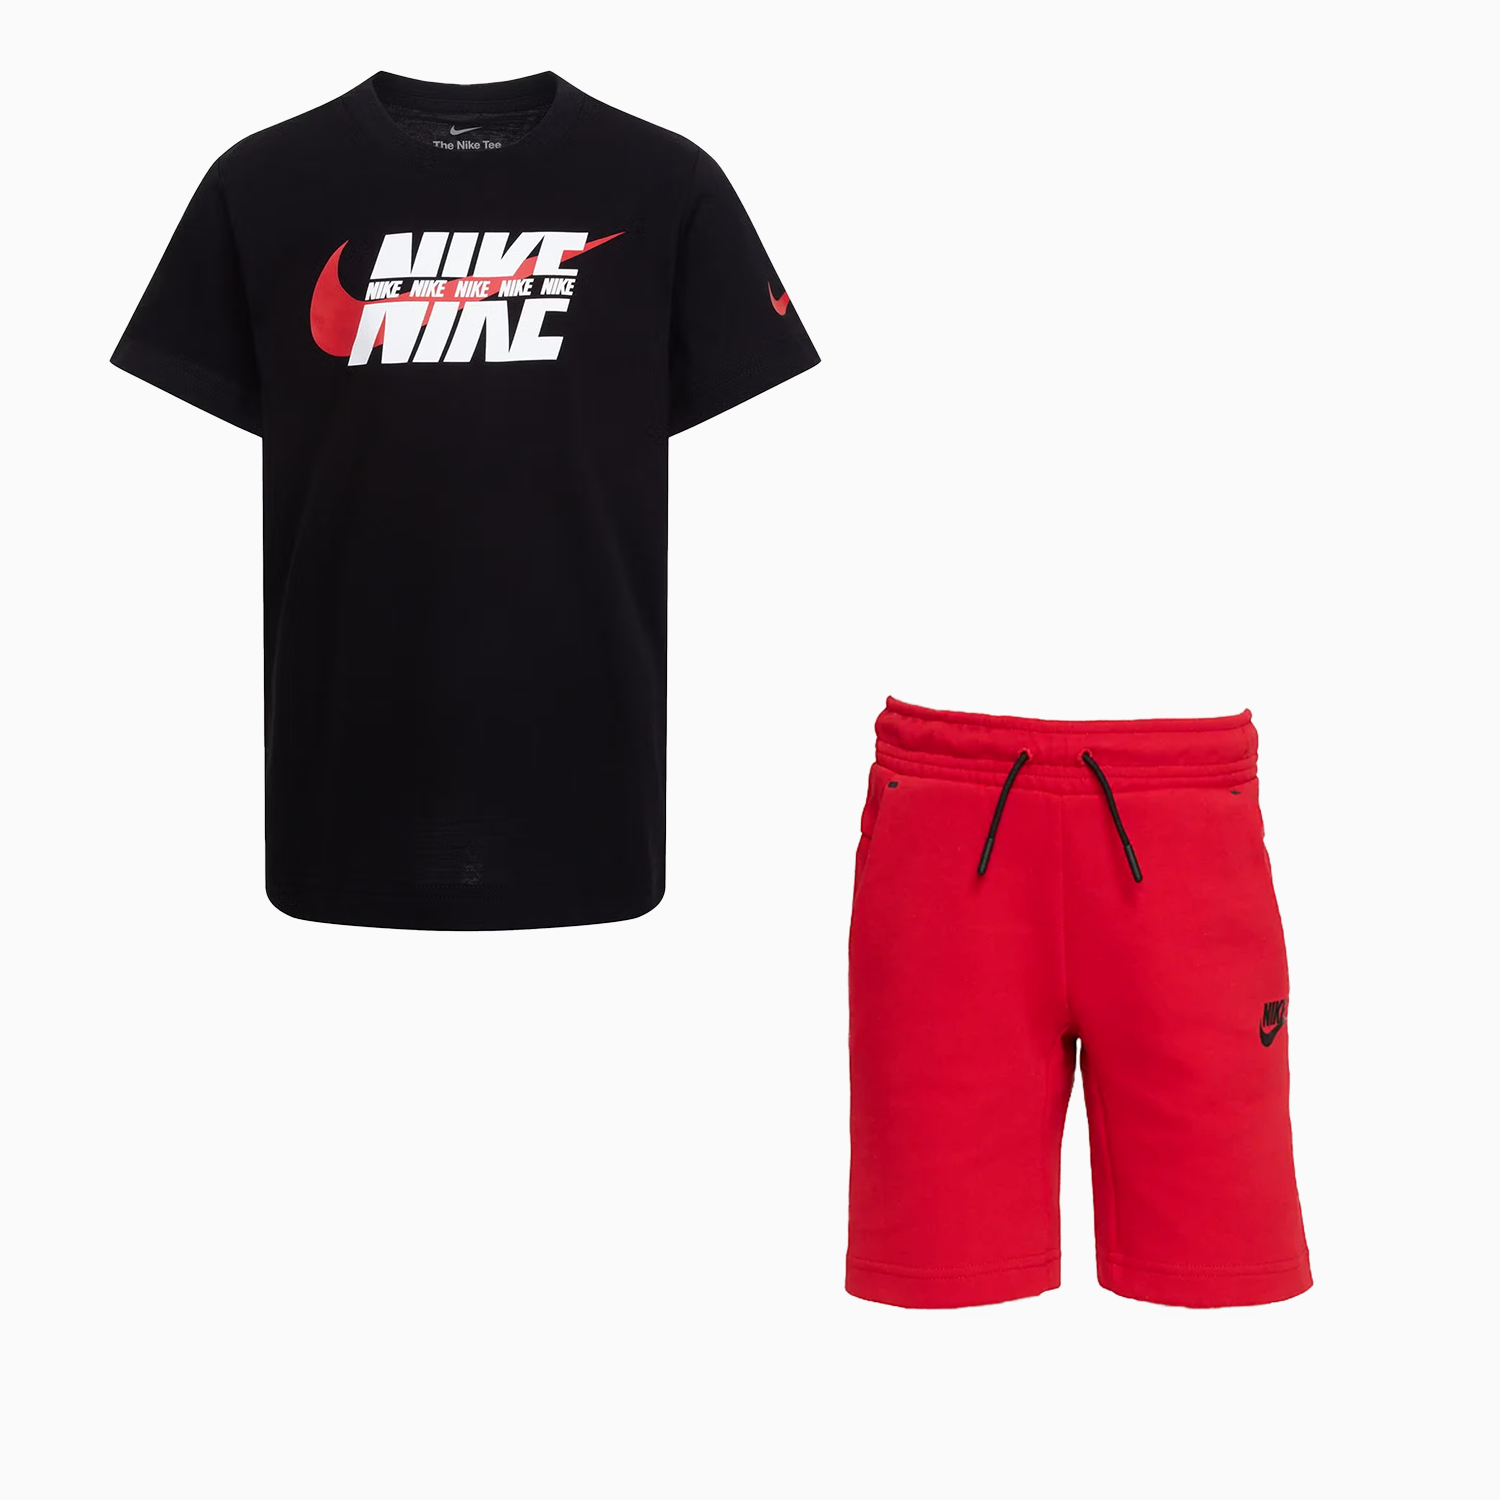 nike-kids-sportswear-t-shirt-and-shorts-outfit-86l879-023-86h593-u10